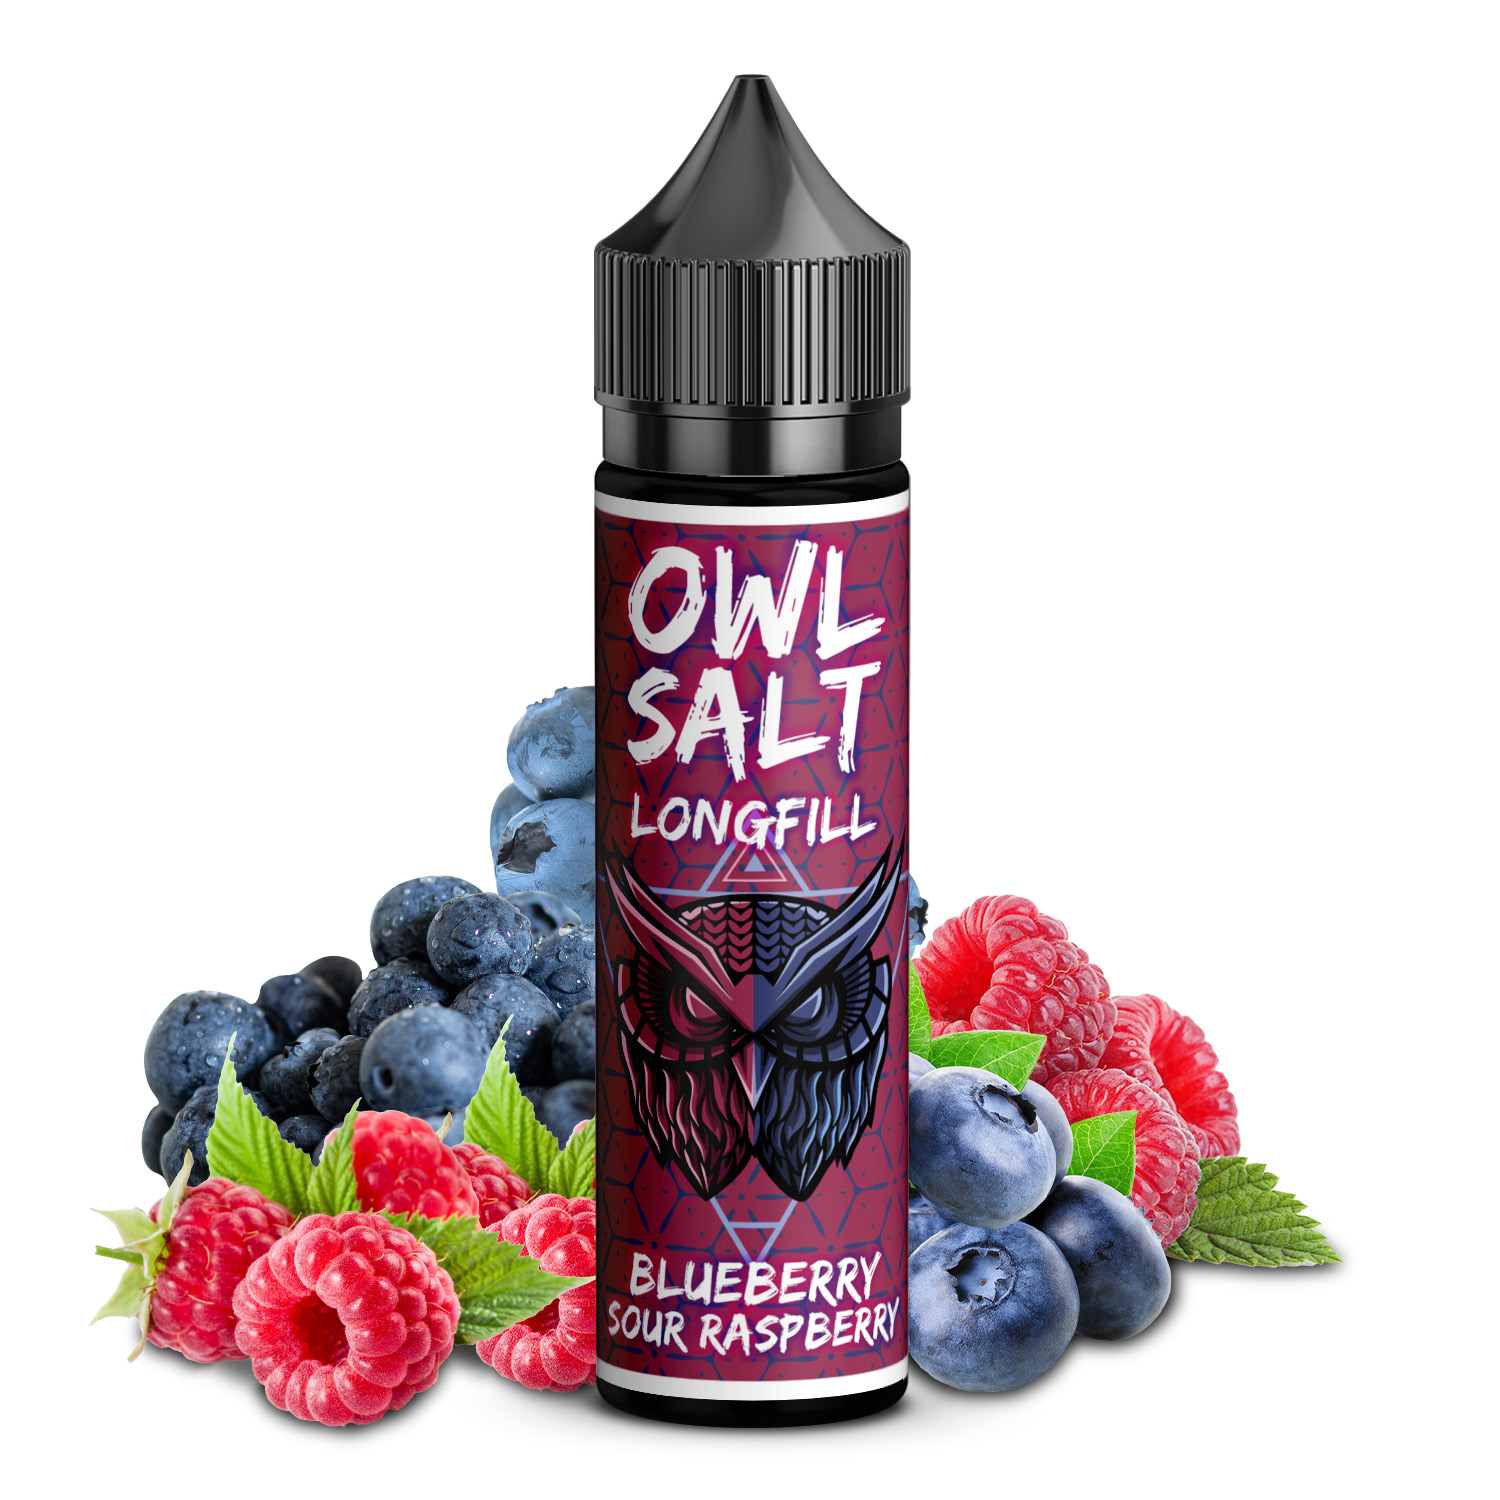 OWL Salt Blueberry Sour Raspberry Overdosed Aroma Longfill 10ml